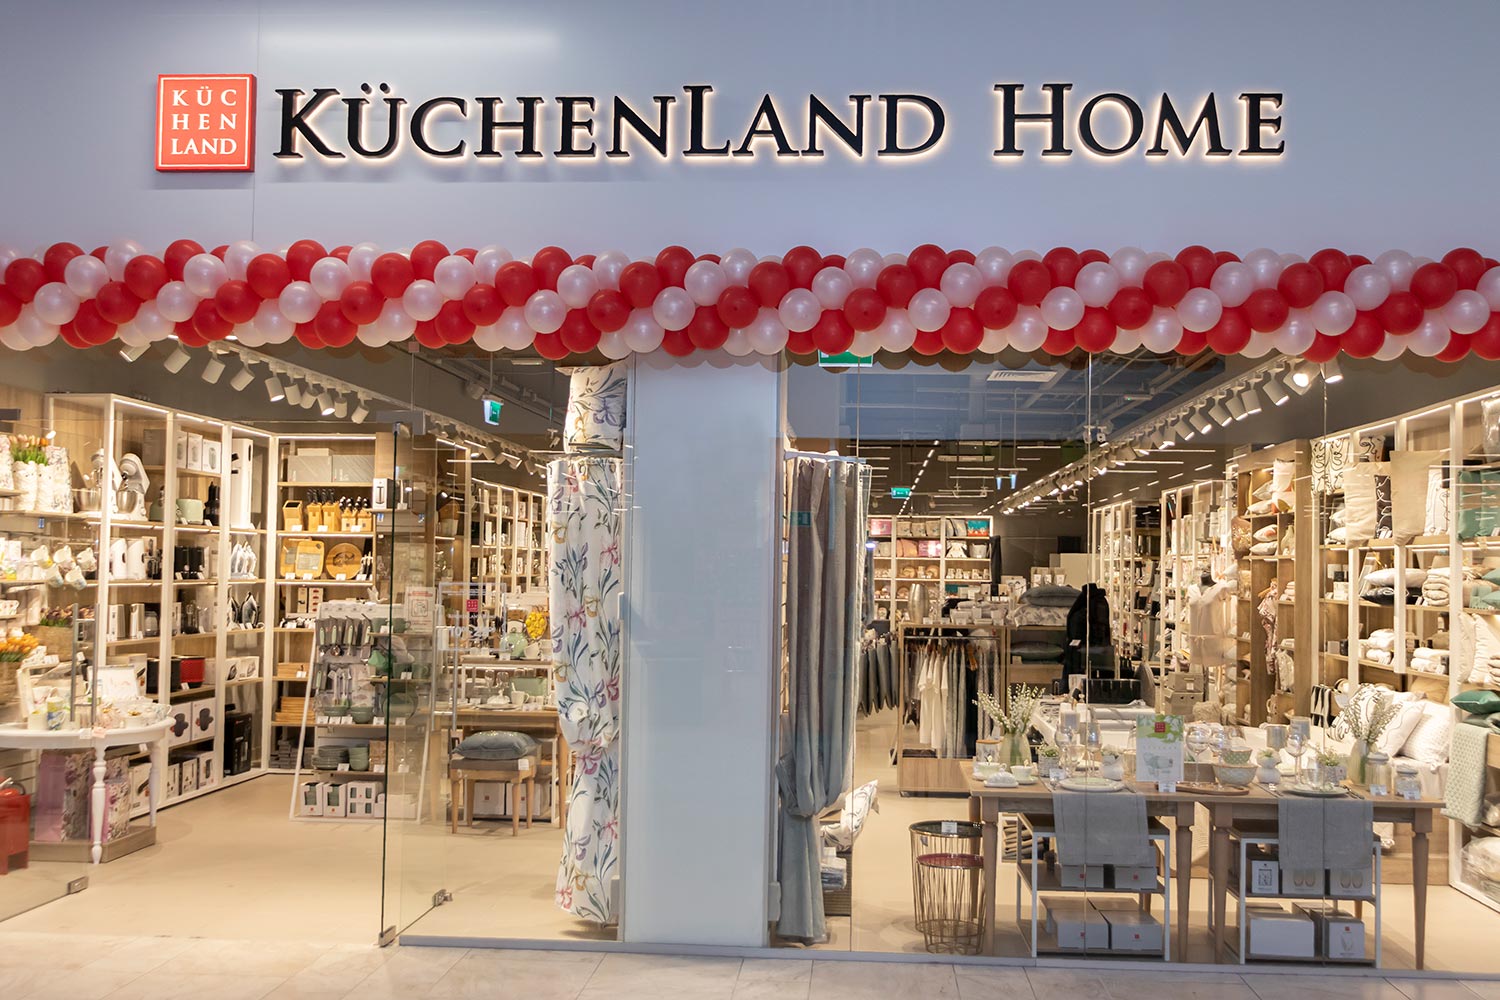 Кухнеленд магазин. Магазин Kuchenland. Магазин кюхенленд. Kuchenland Home. Магазин кученлэнд хоум.